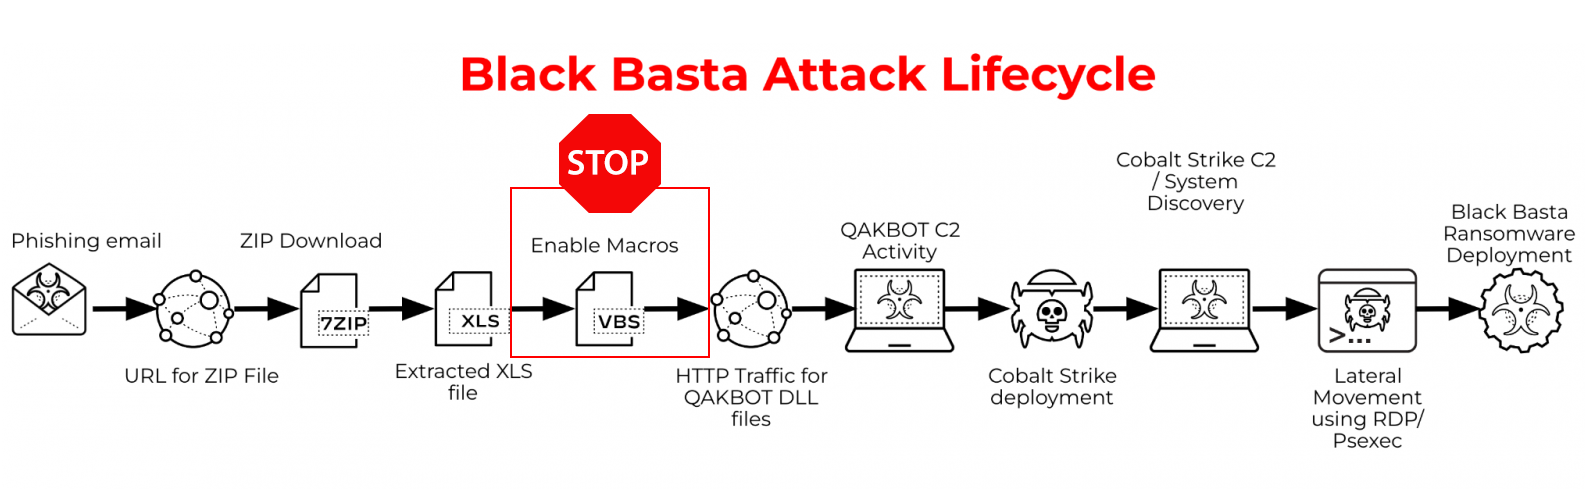 blackbasta-attack-cycle-stopp